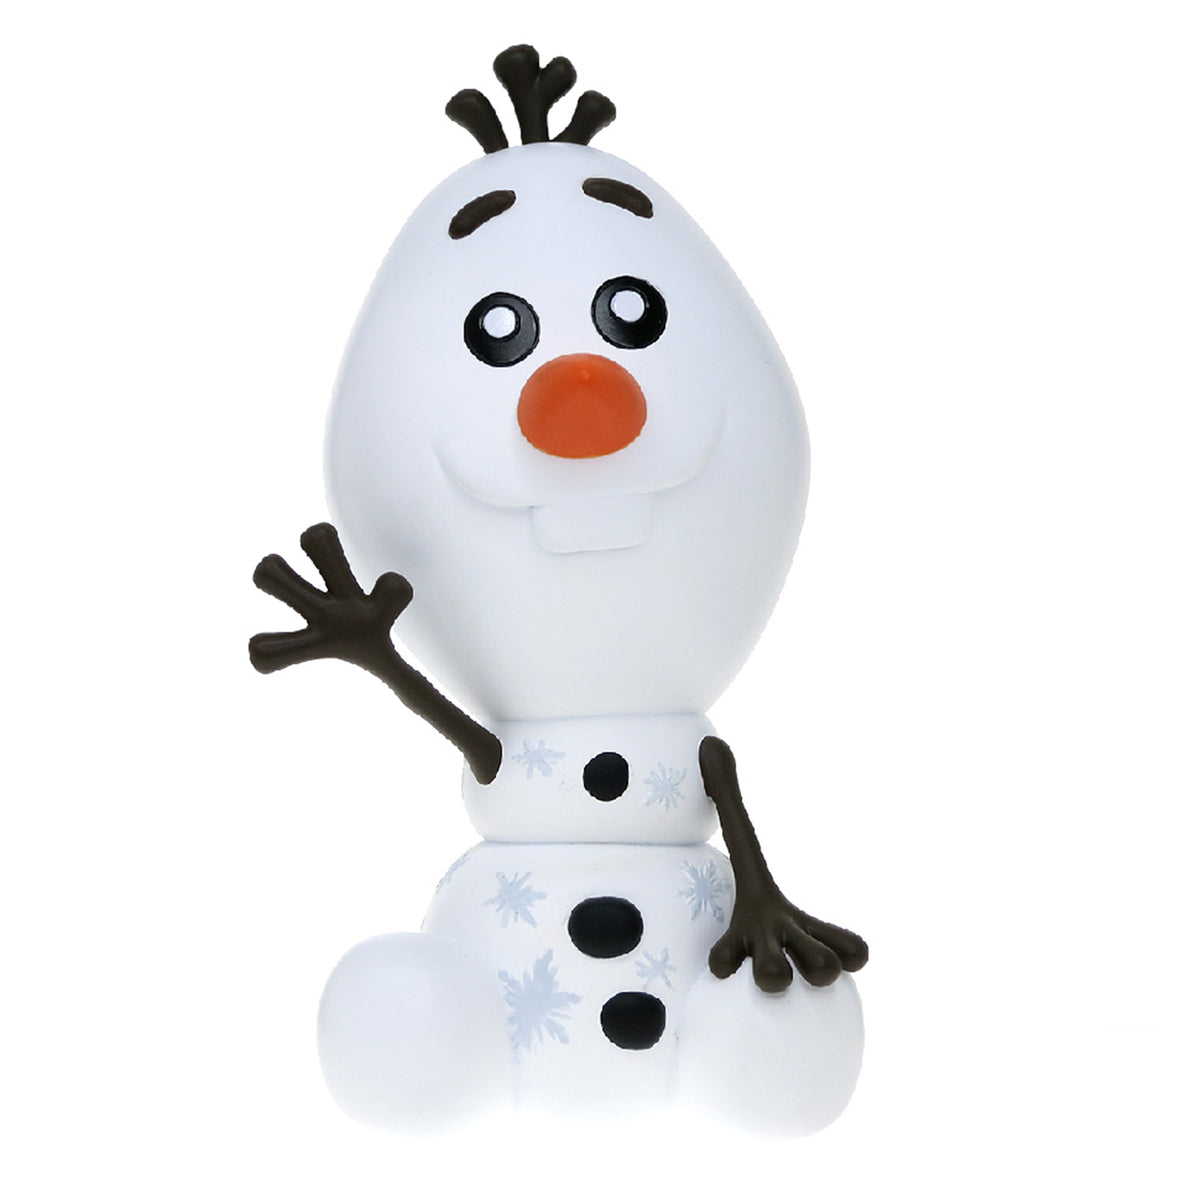 Disney Frozen Olaf Figural Display Bank